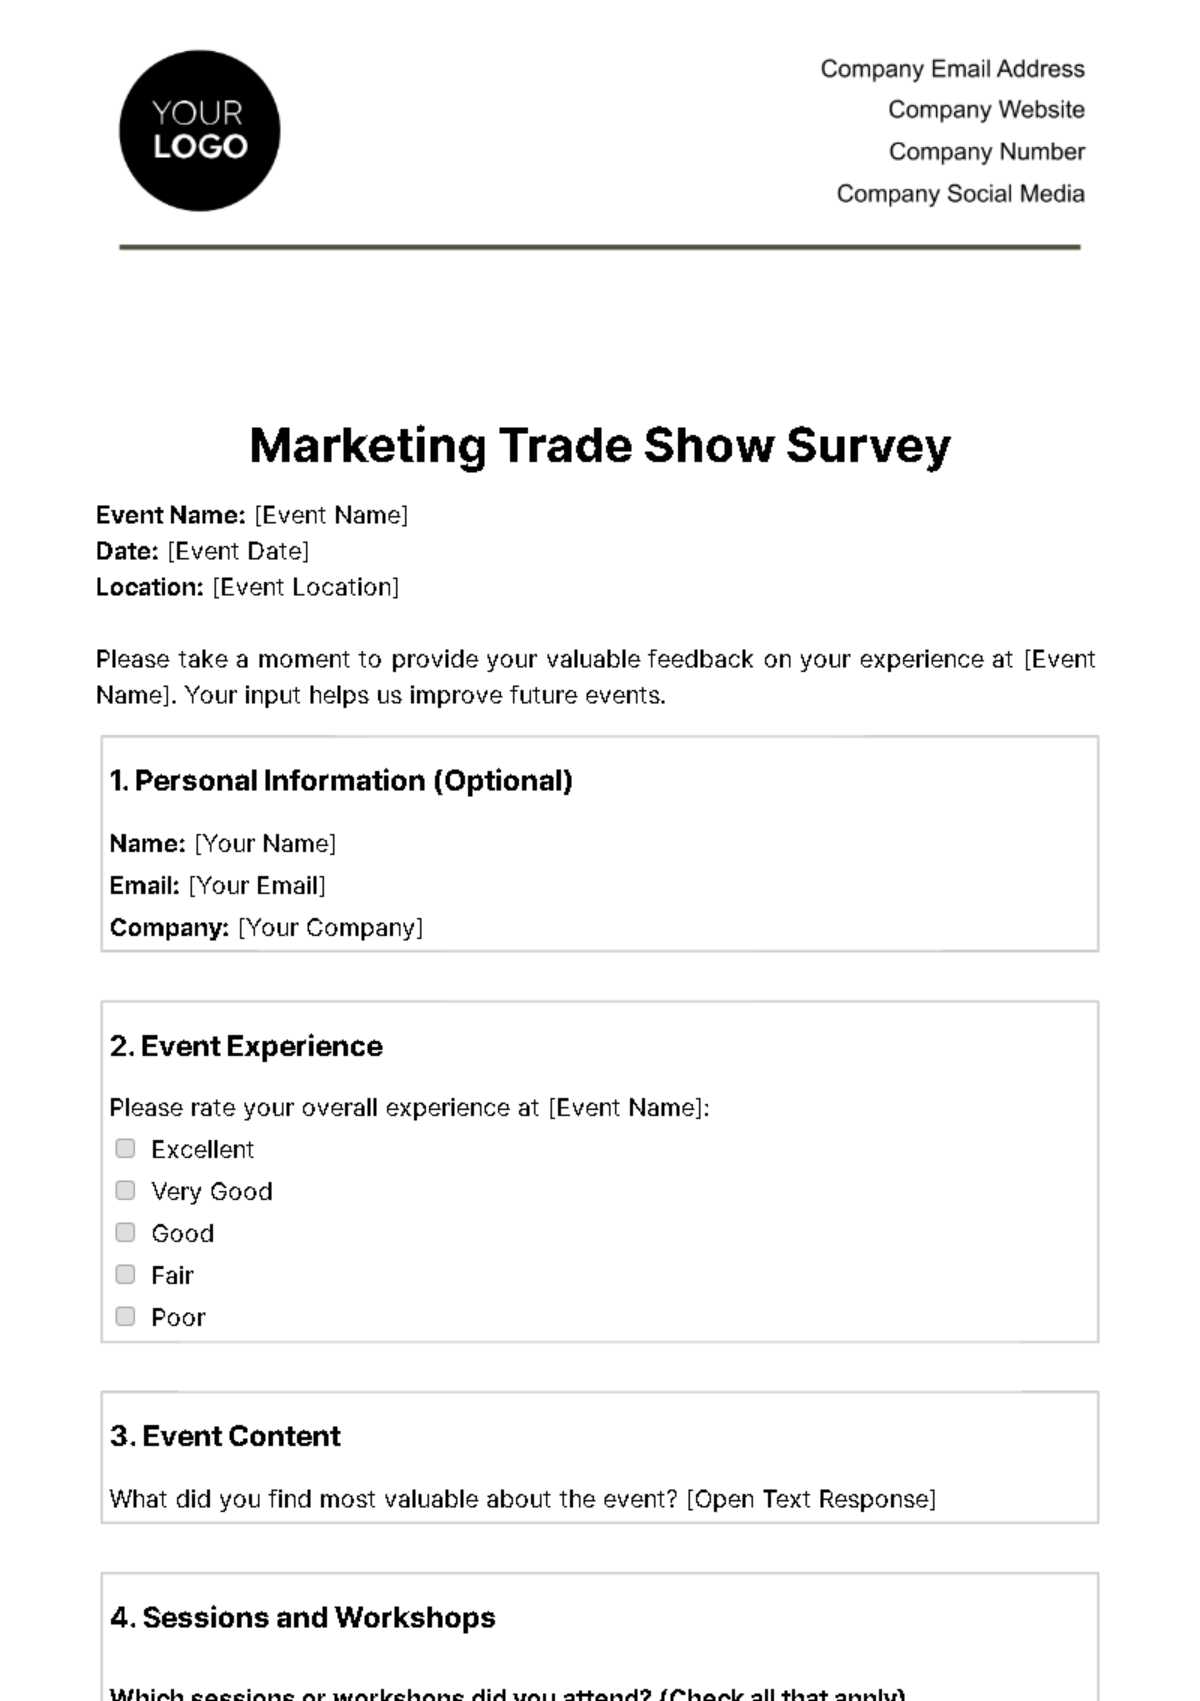 Free Marketing Trade Show Survey Template